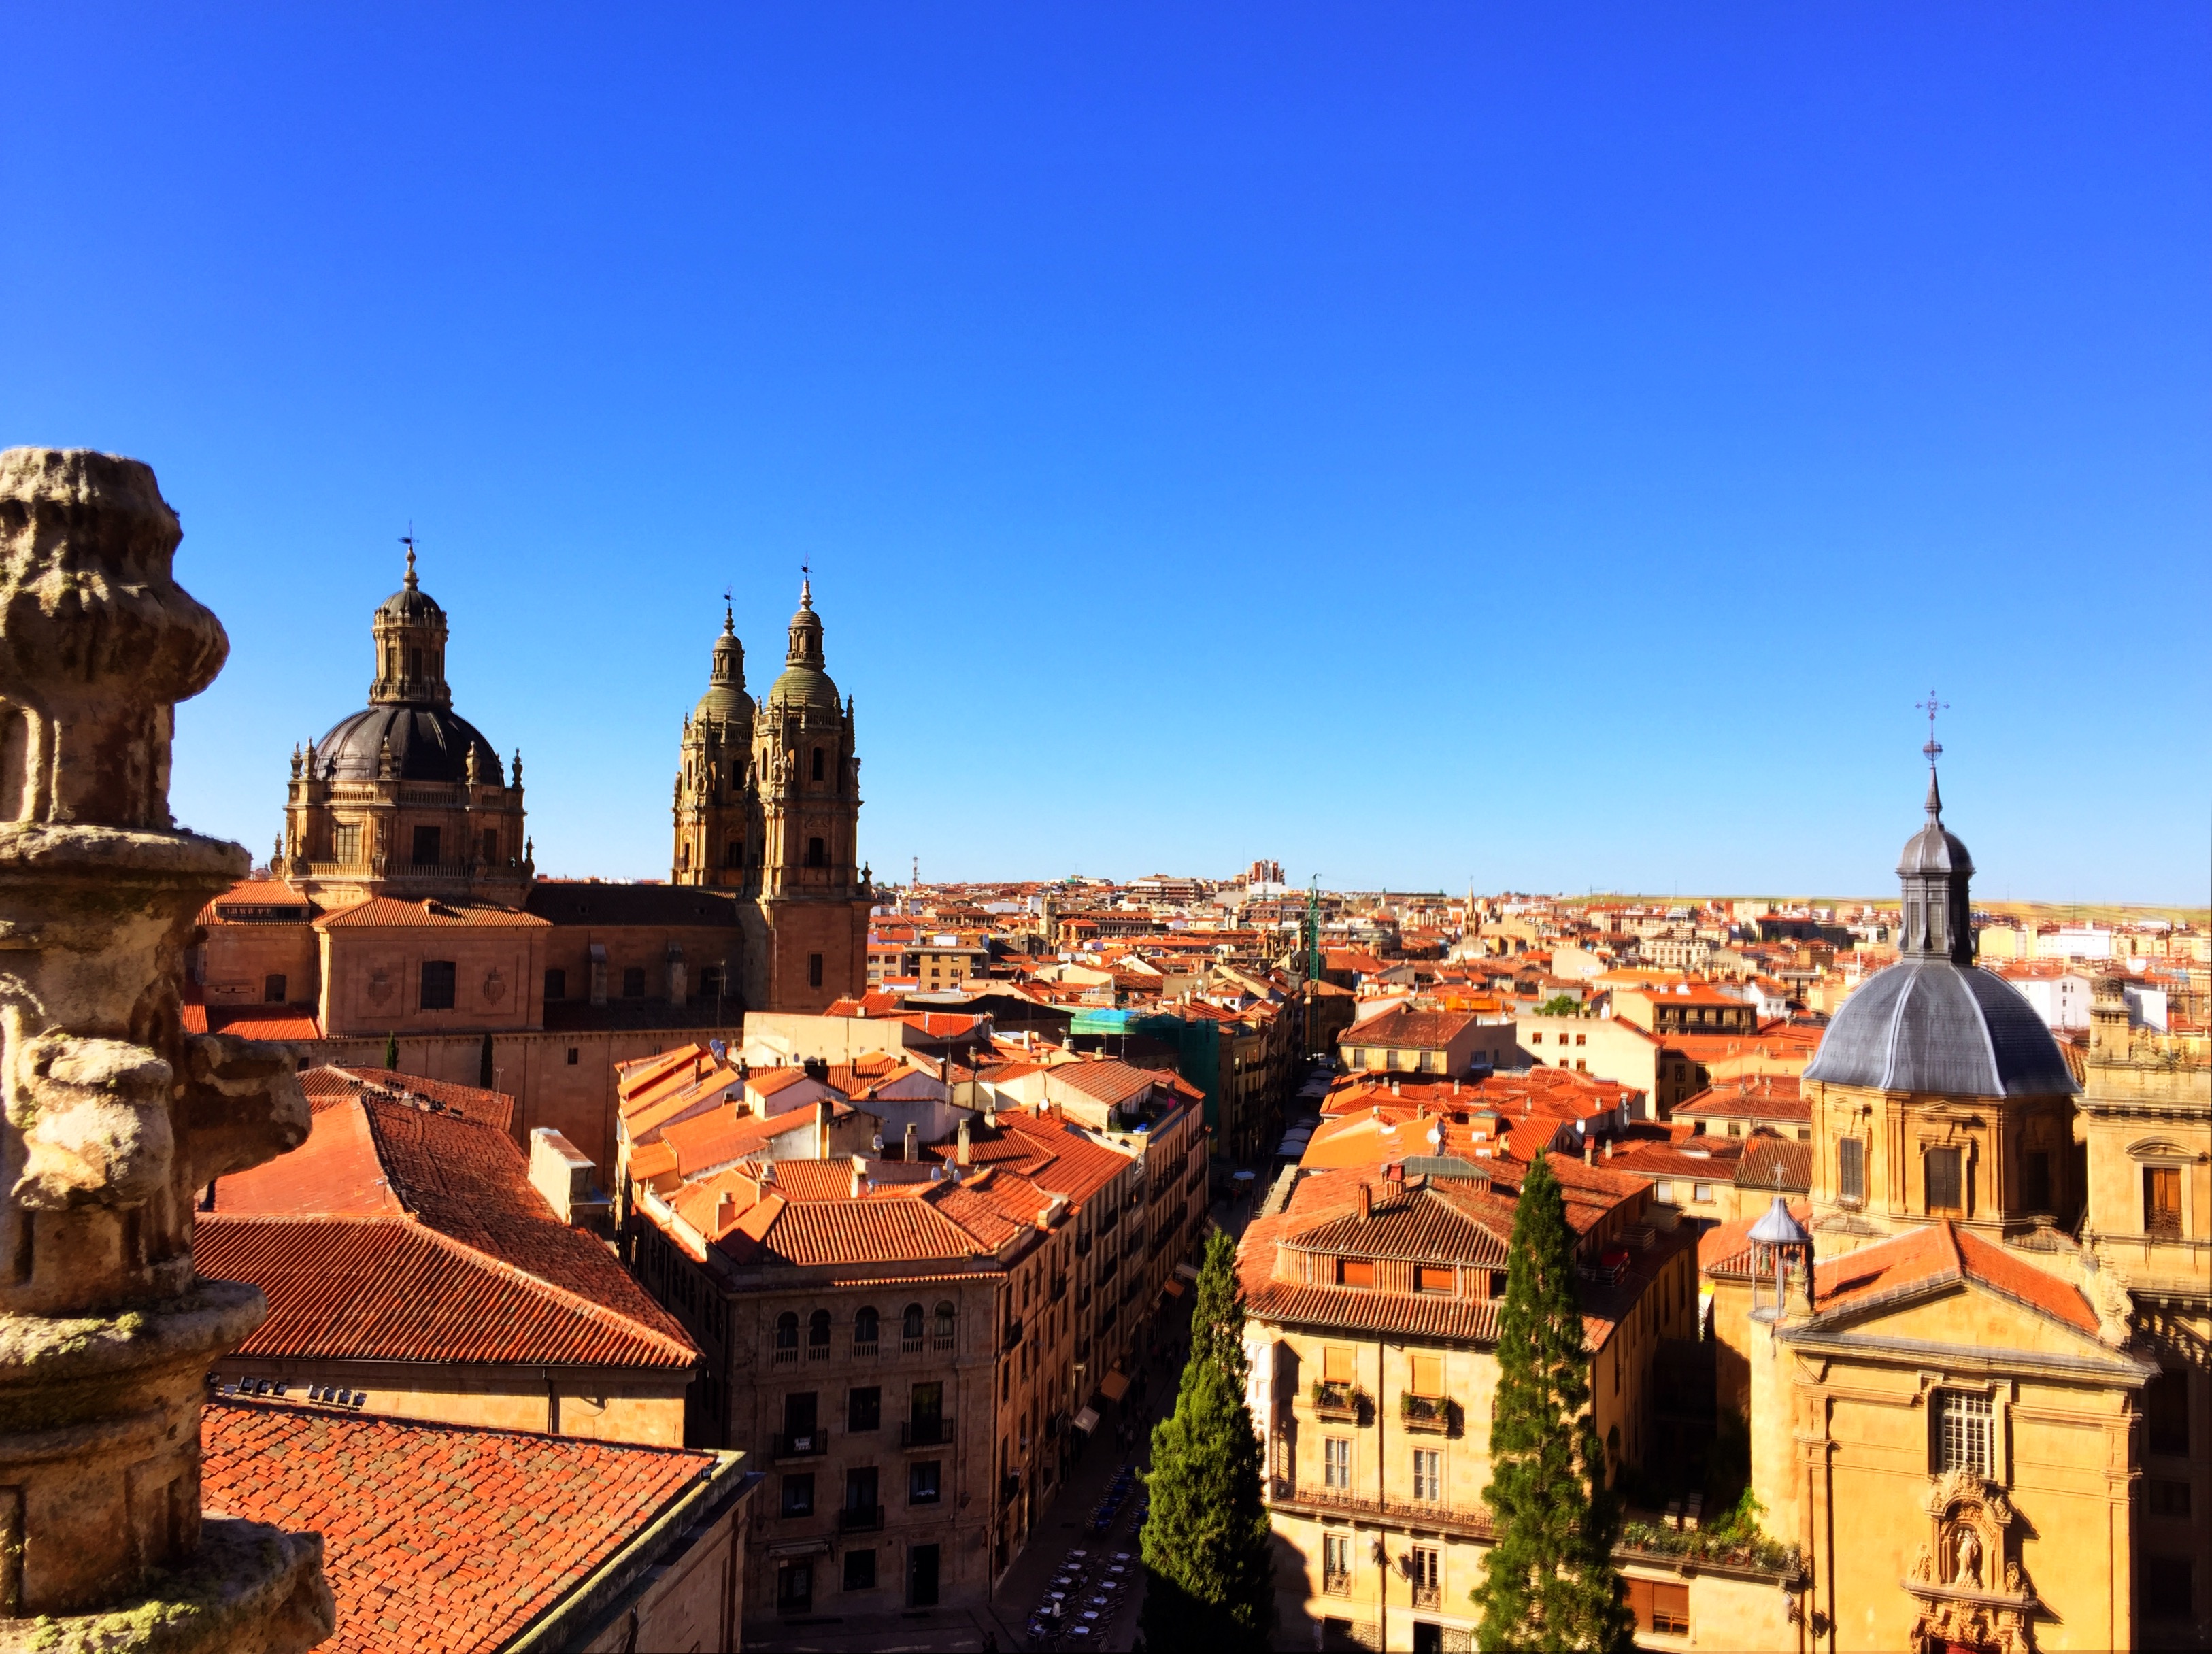 Salamanca – Castilla y Leon’s city of beauty